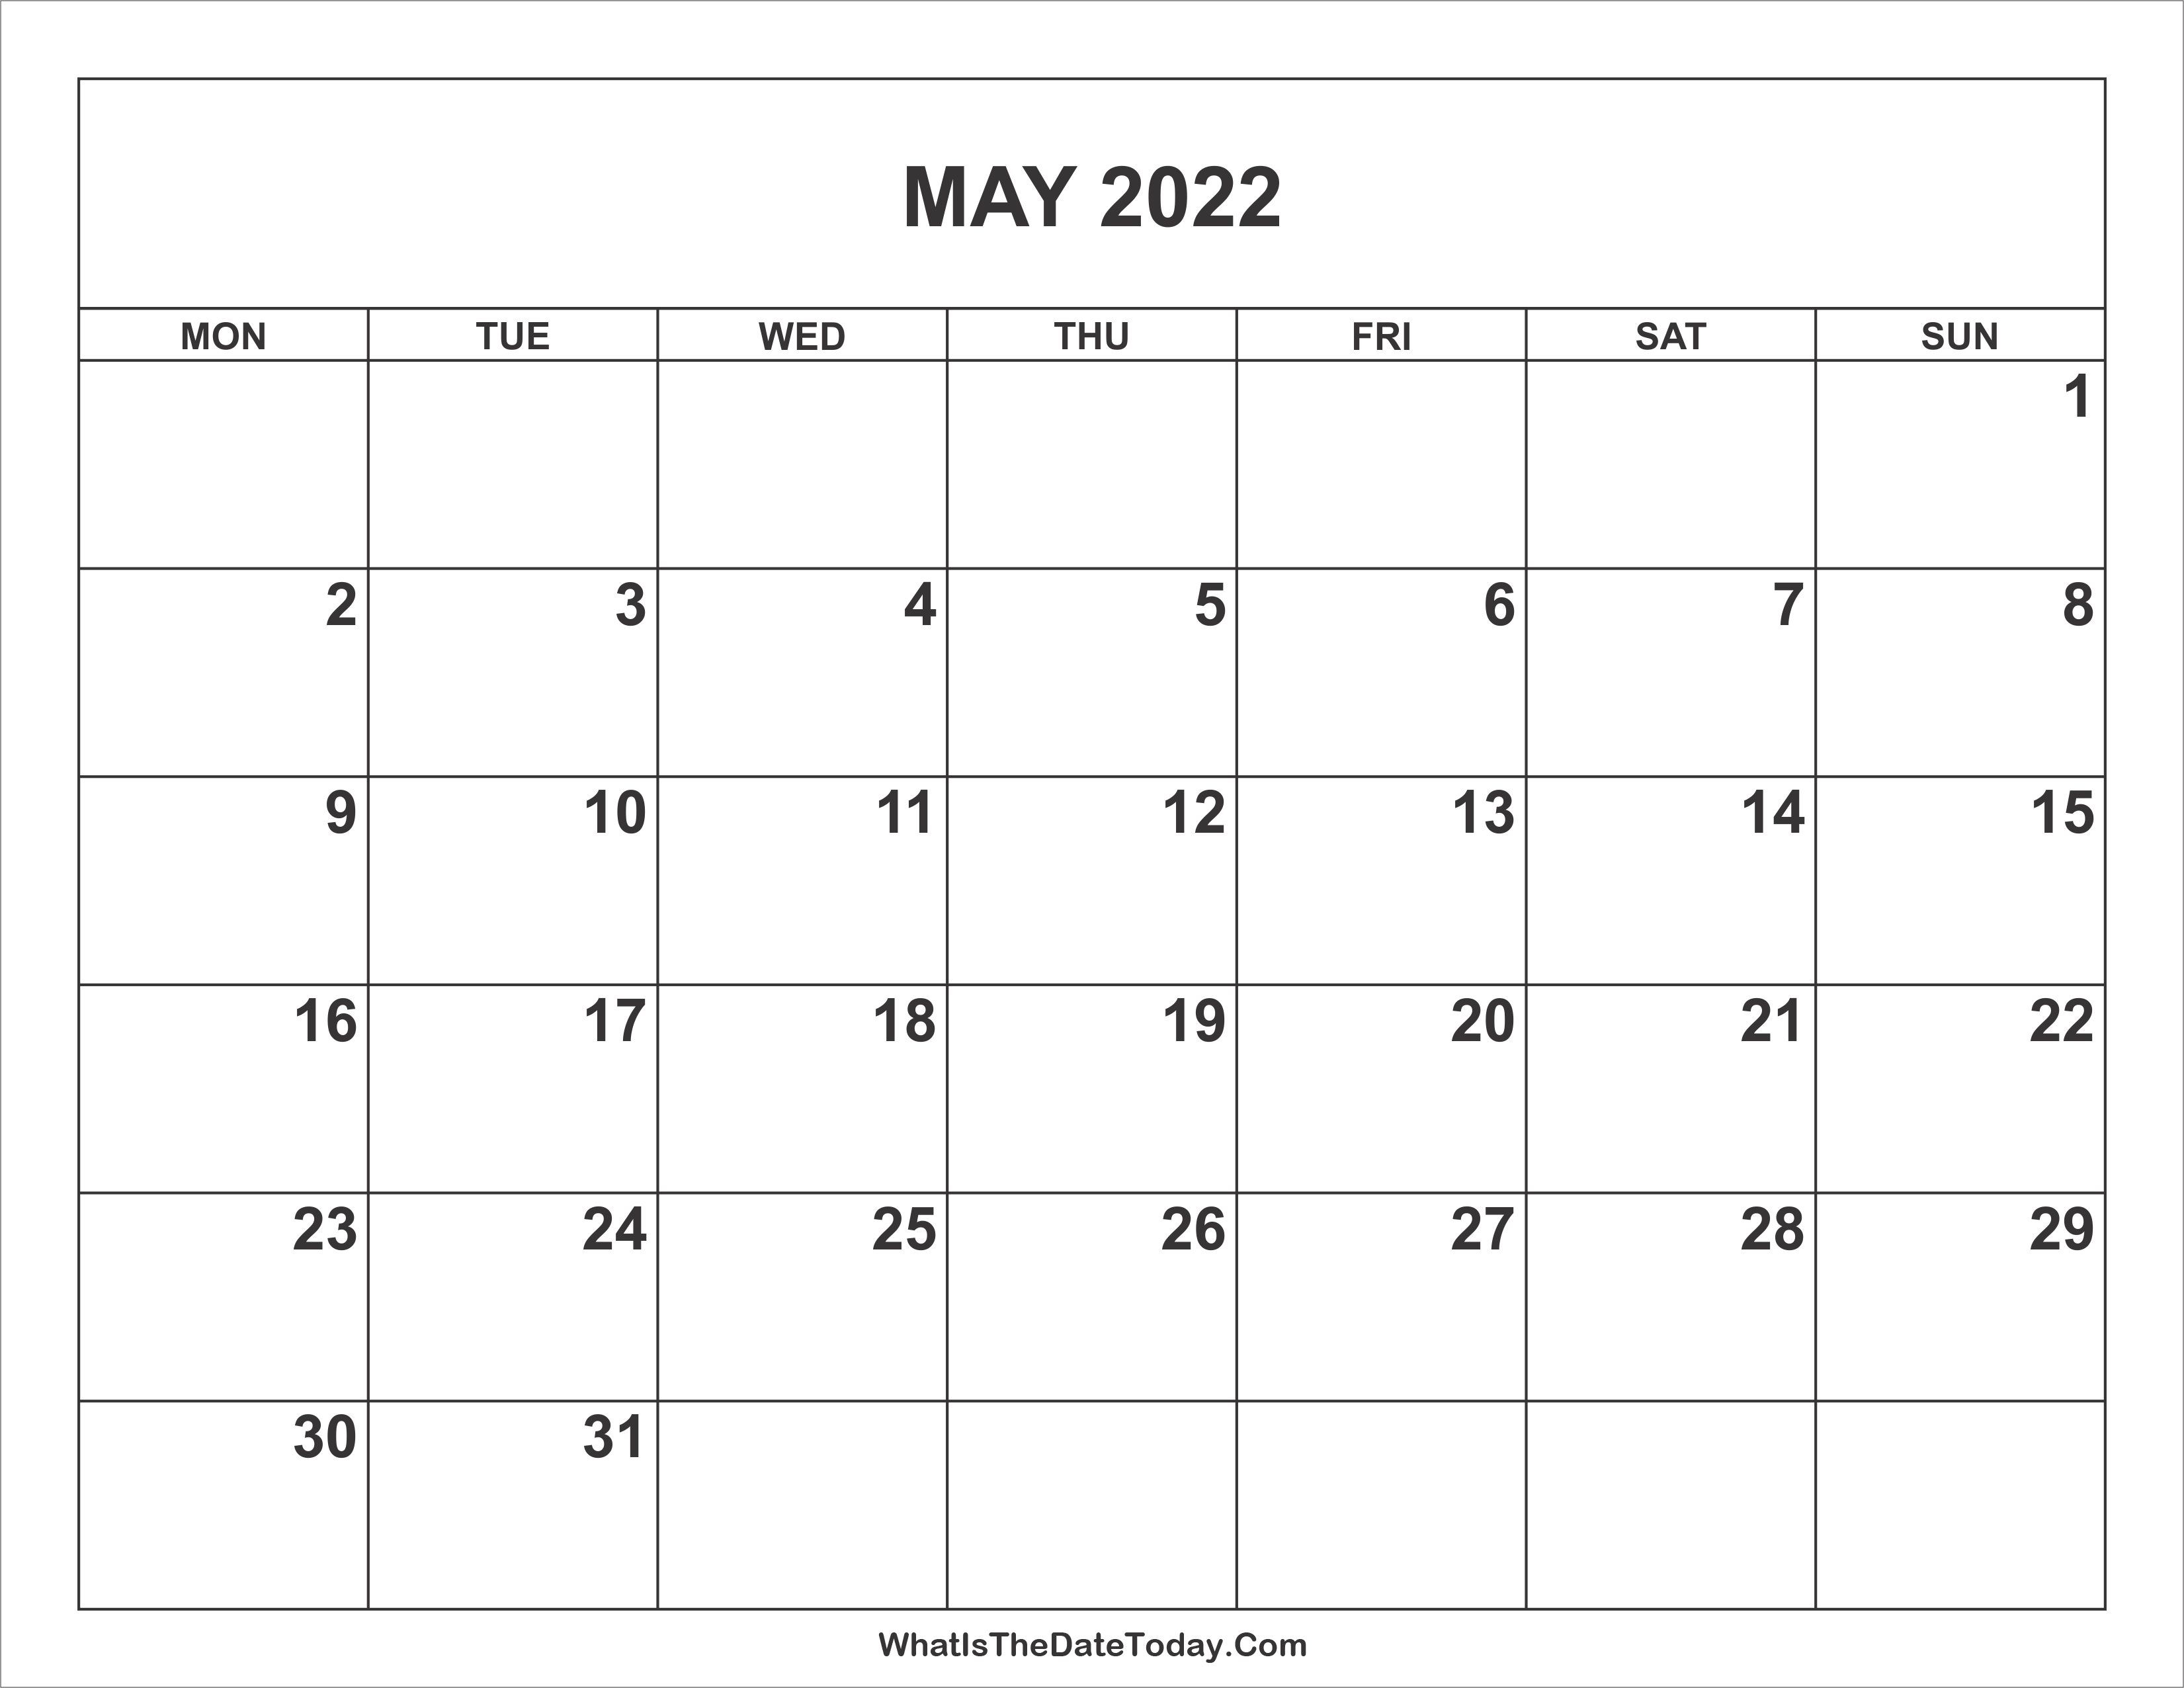 May 2022 Calendar Whatisthedatetoday Com